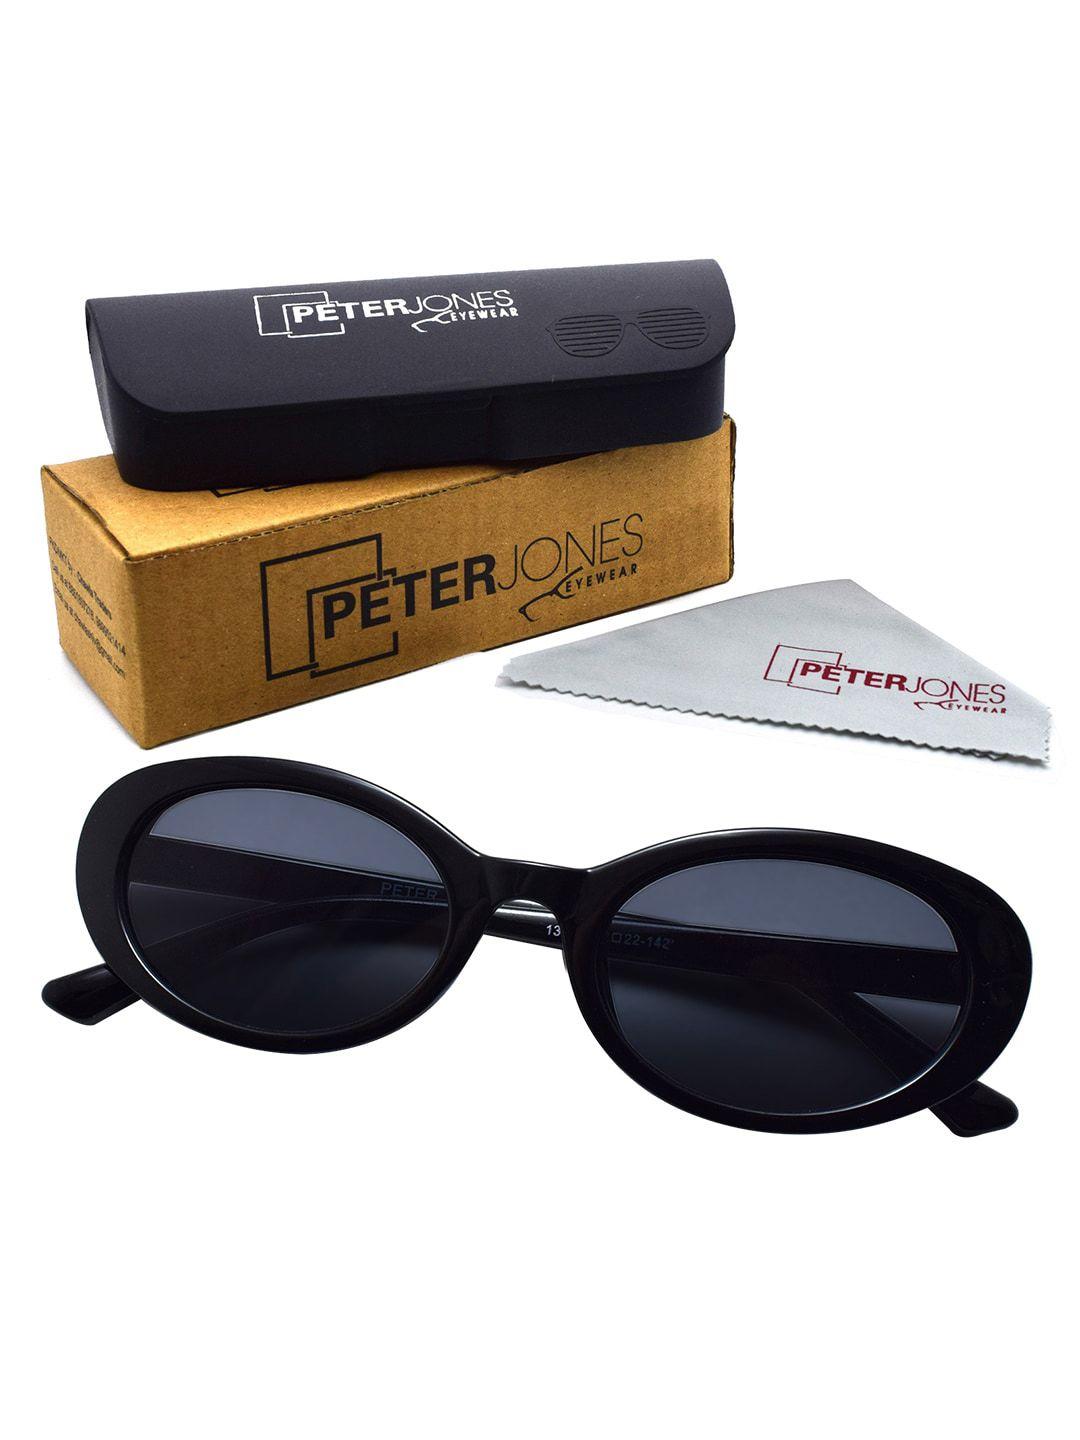 peter jones eyewear square sunglasses with uv protected lens 13026b_s